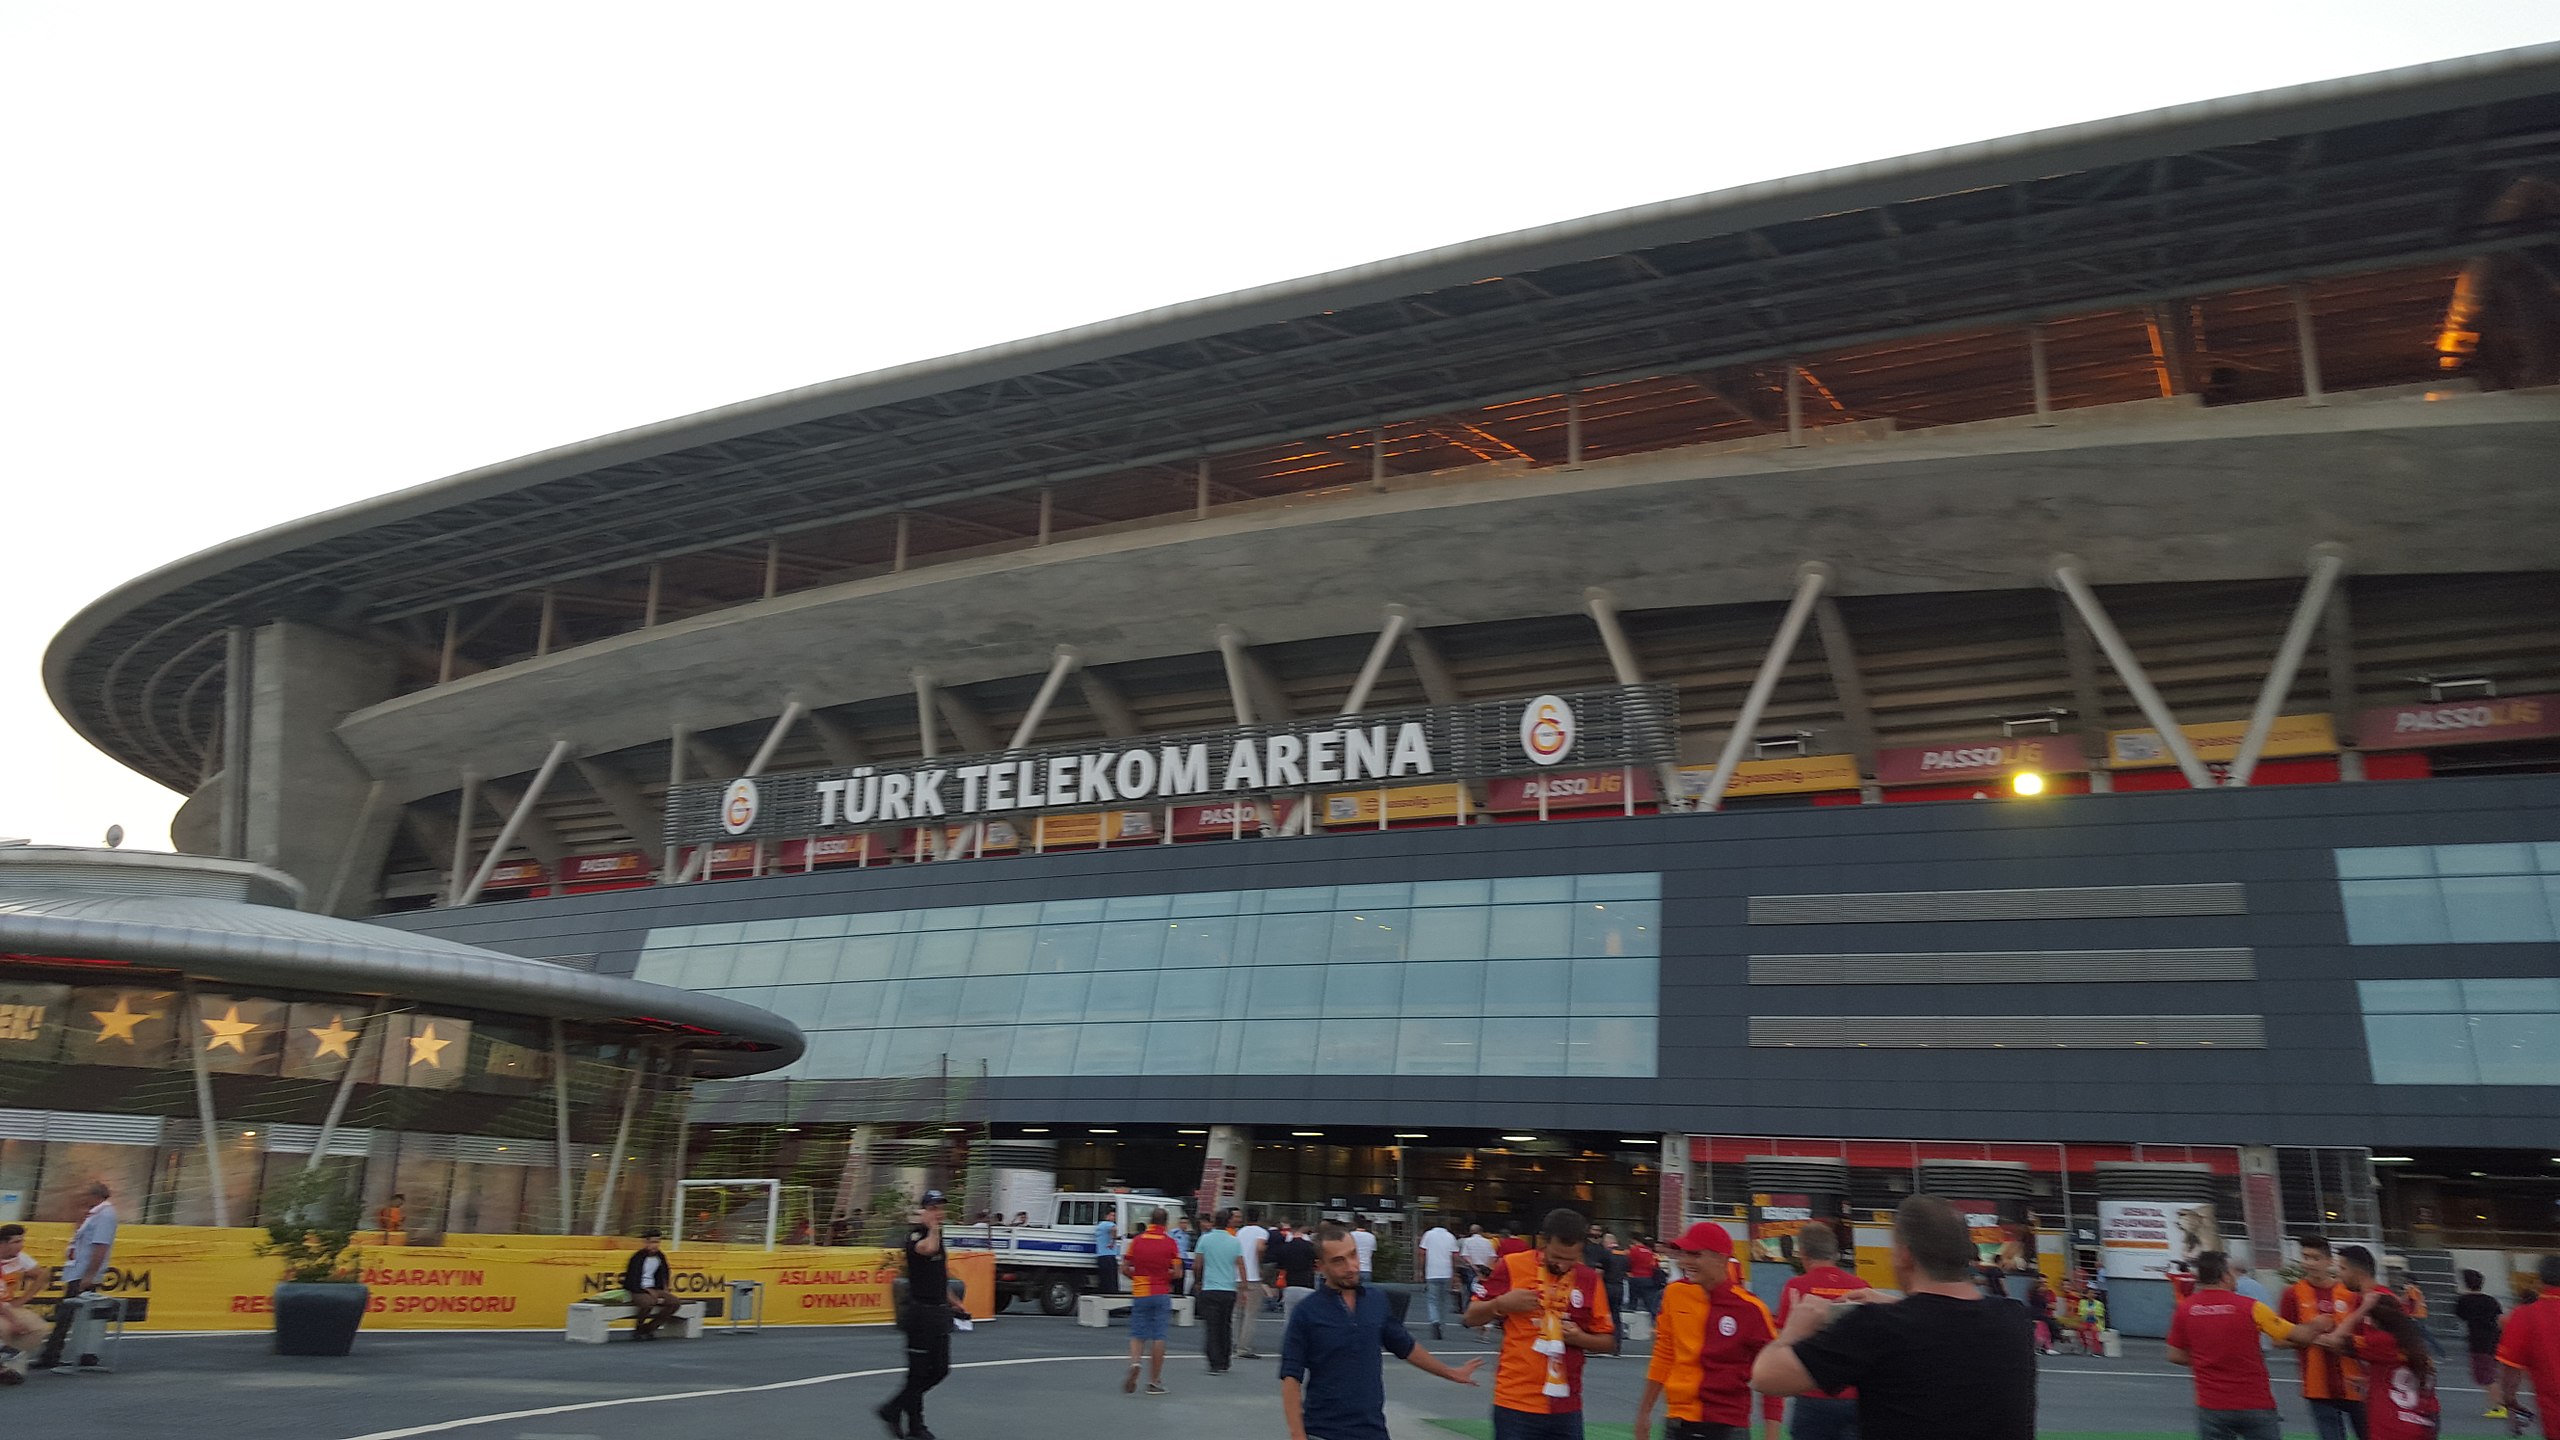 Galatasaray vs. Besiktas FREE LIVE STREAM (5/8/21): Watch Turkey Super Lig  online